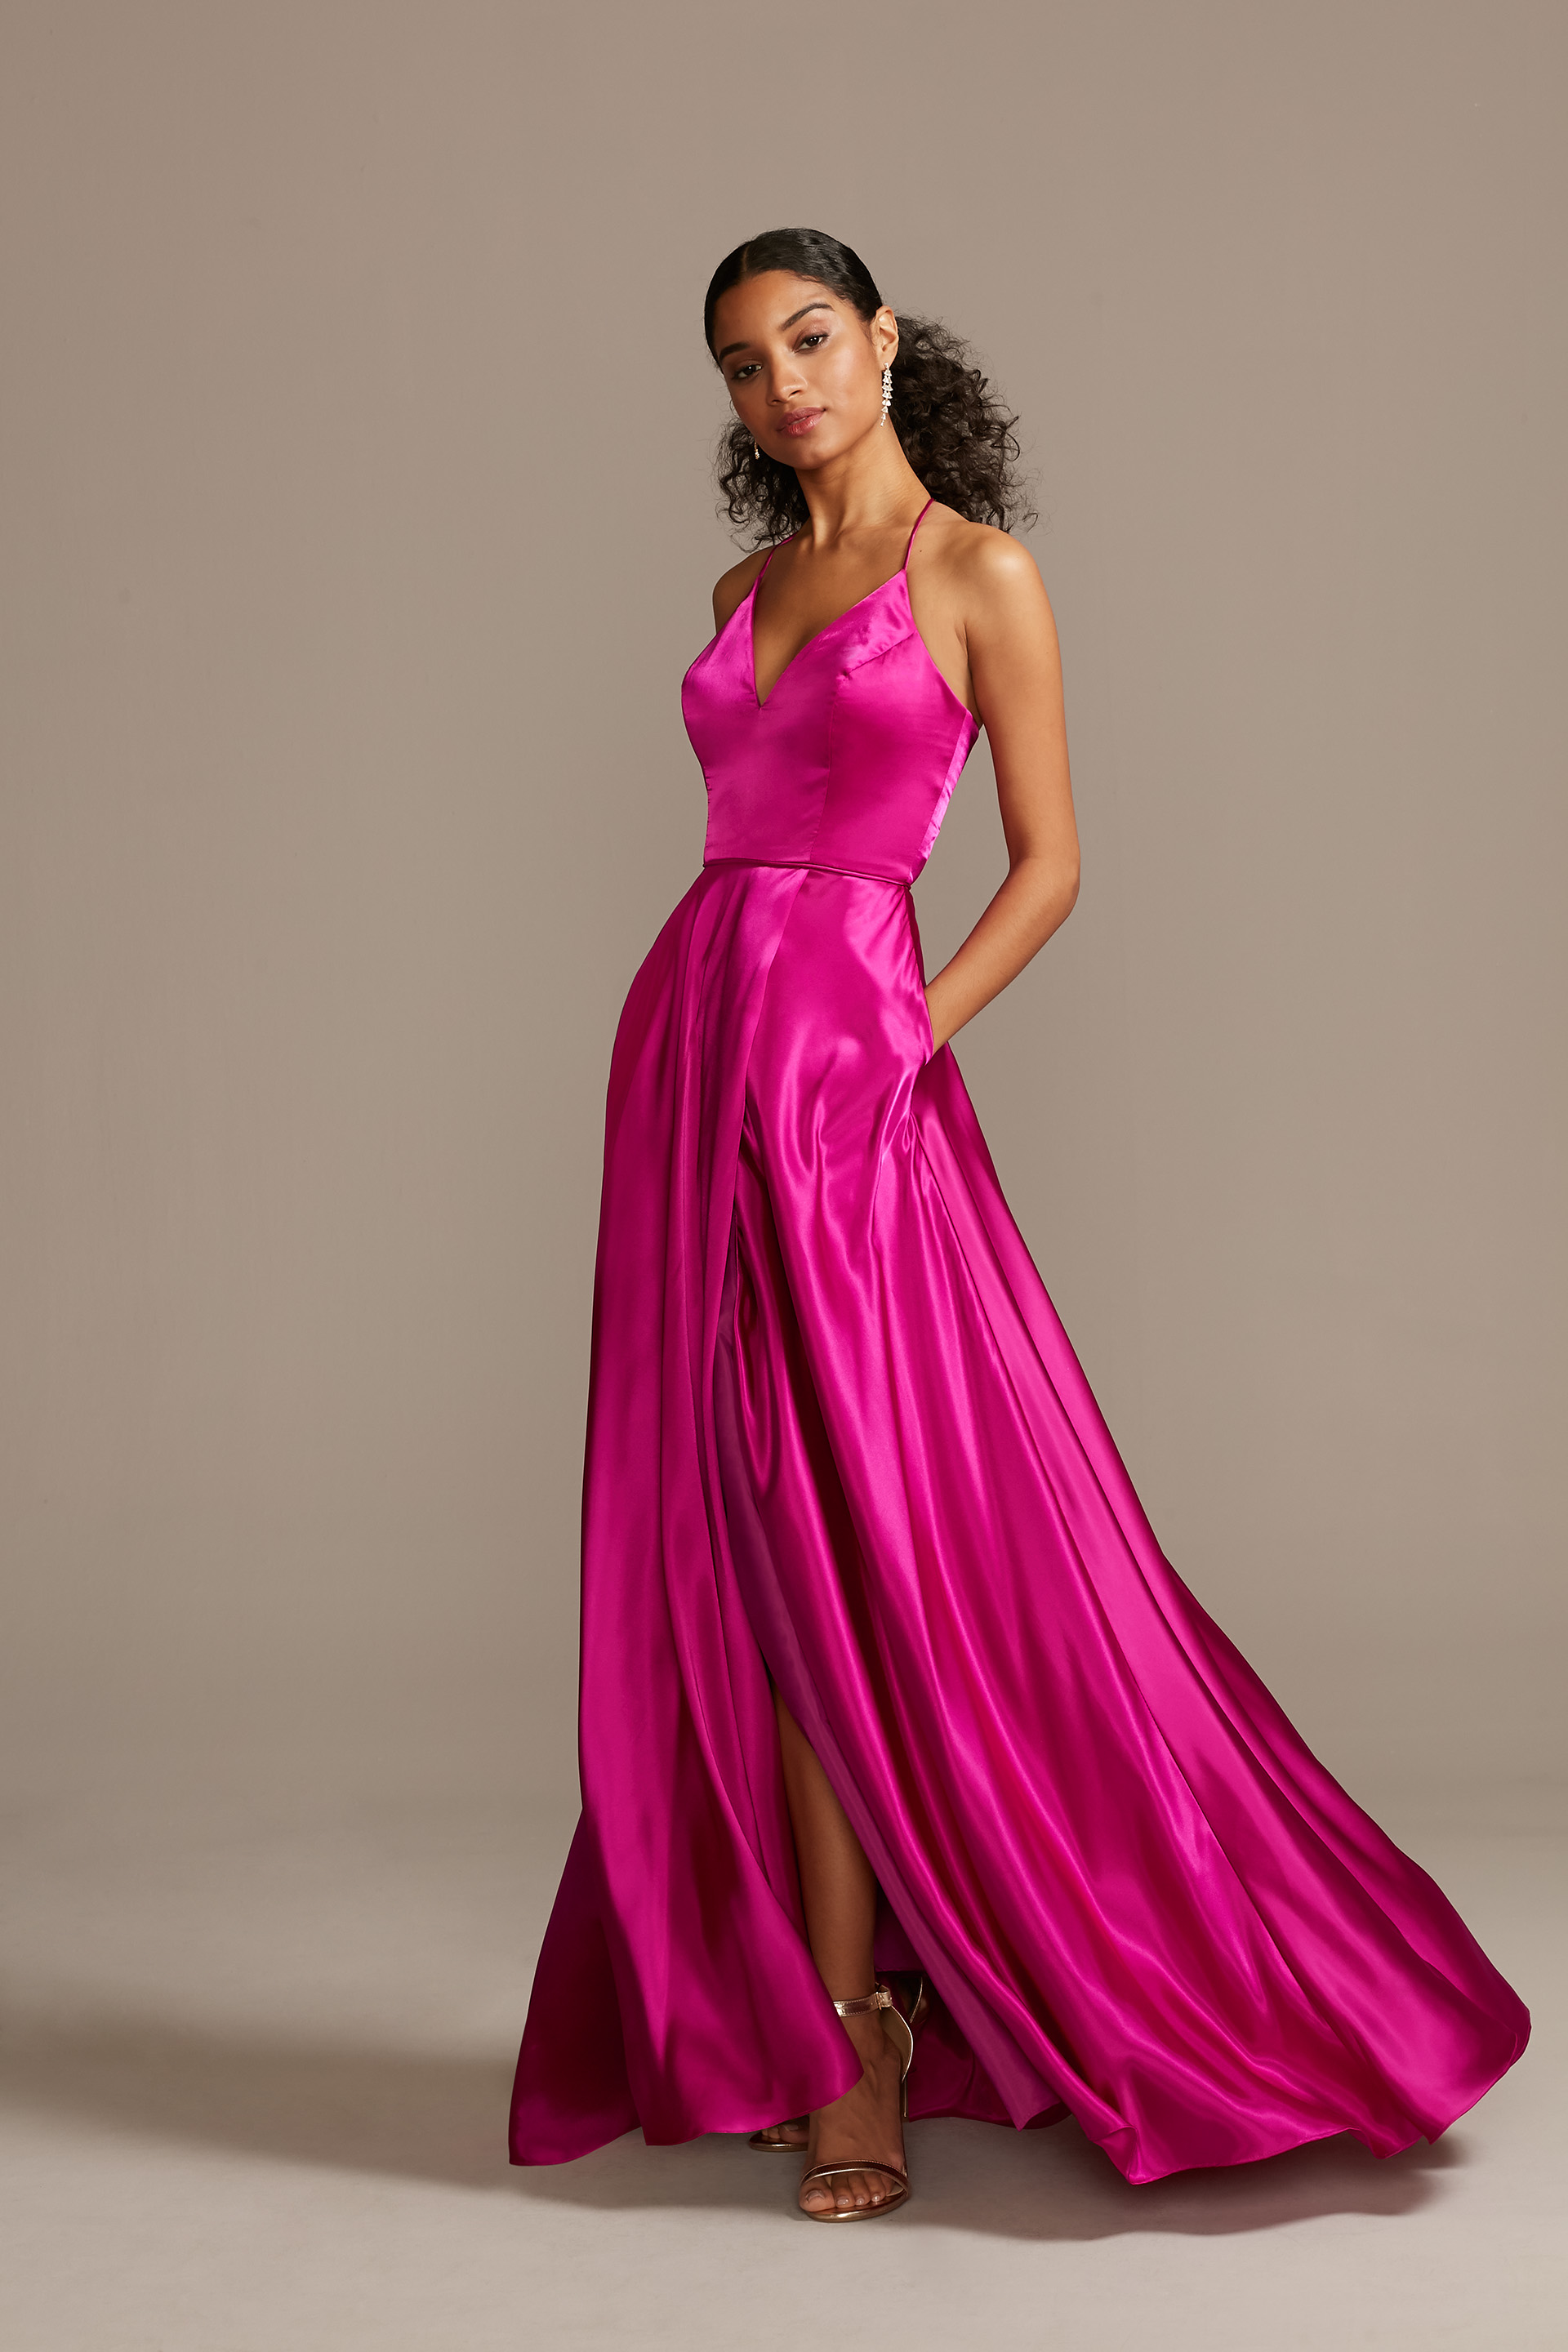 Prom Dresses by Zodiac Sign - David's Bridal Blog